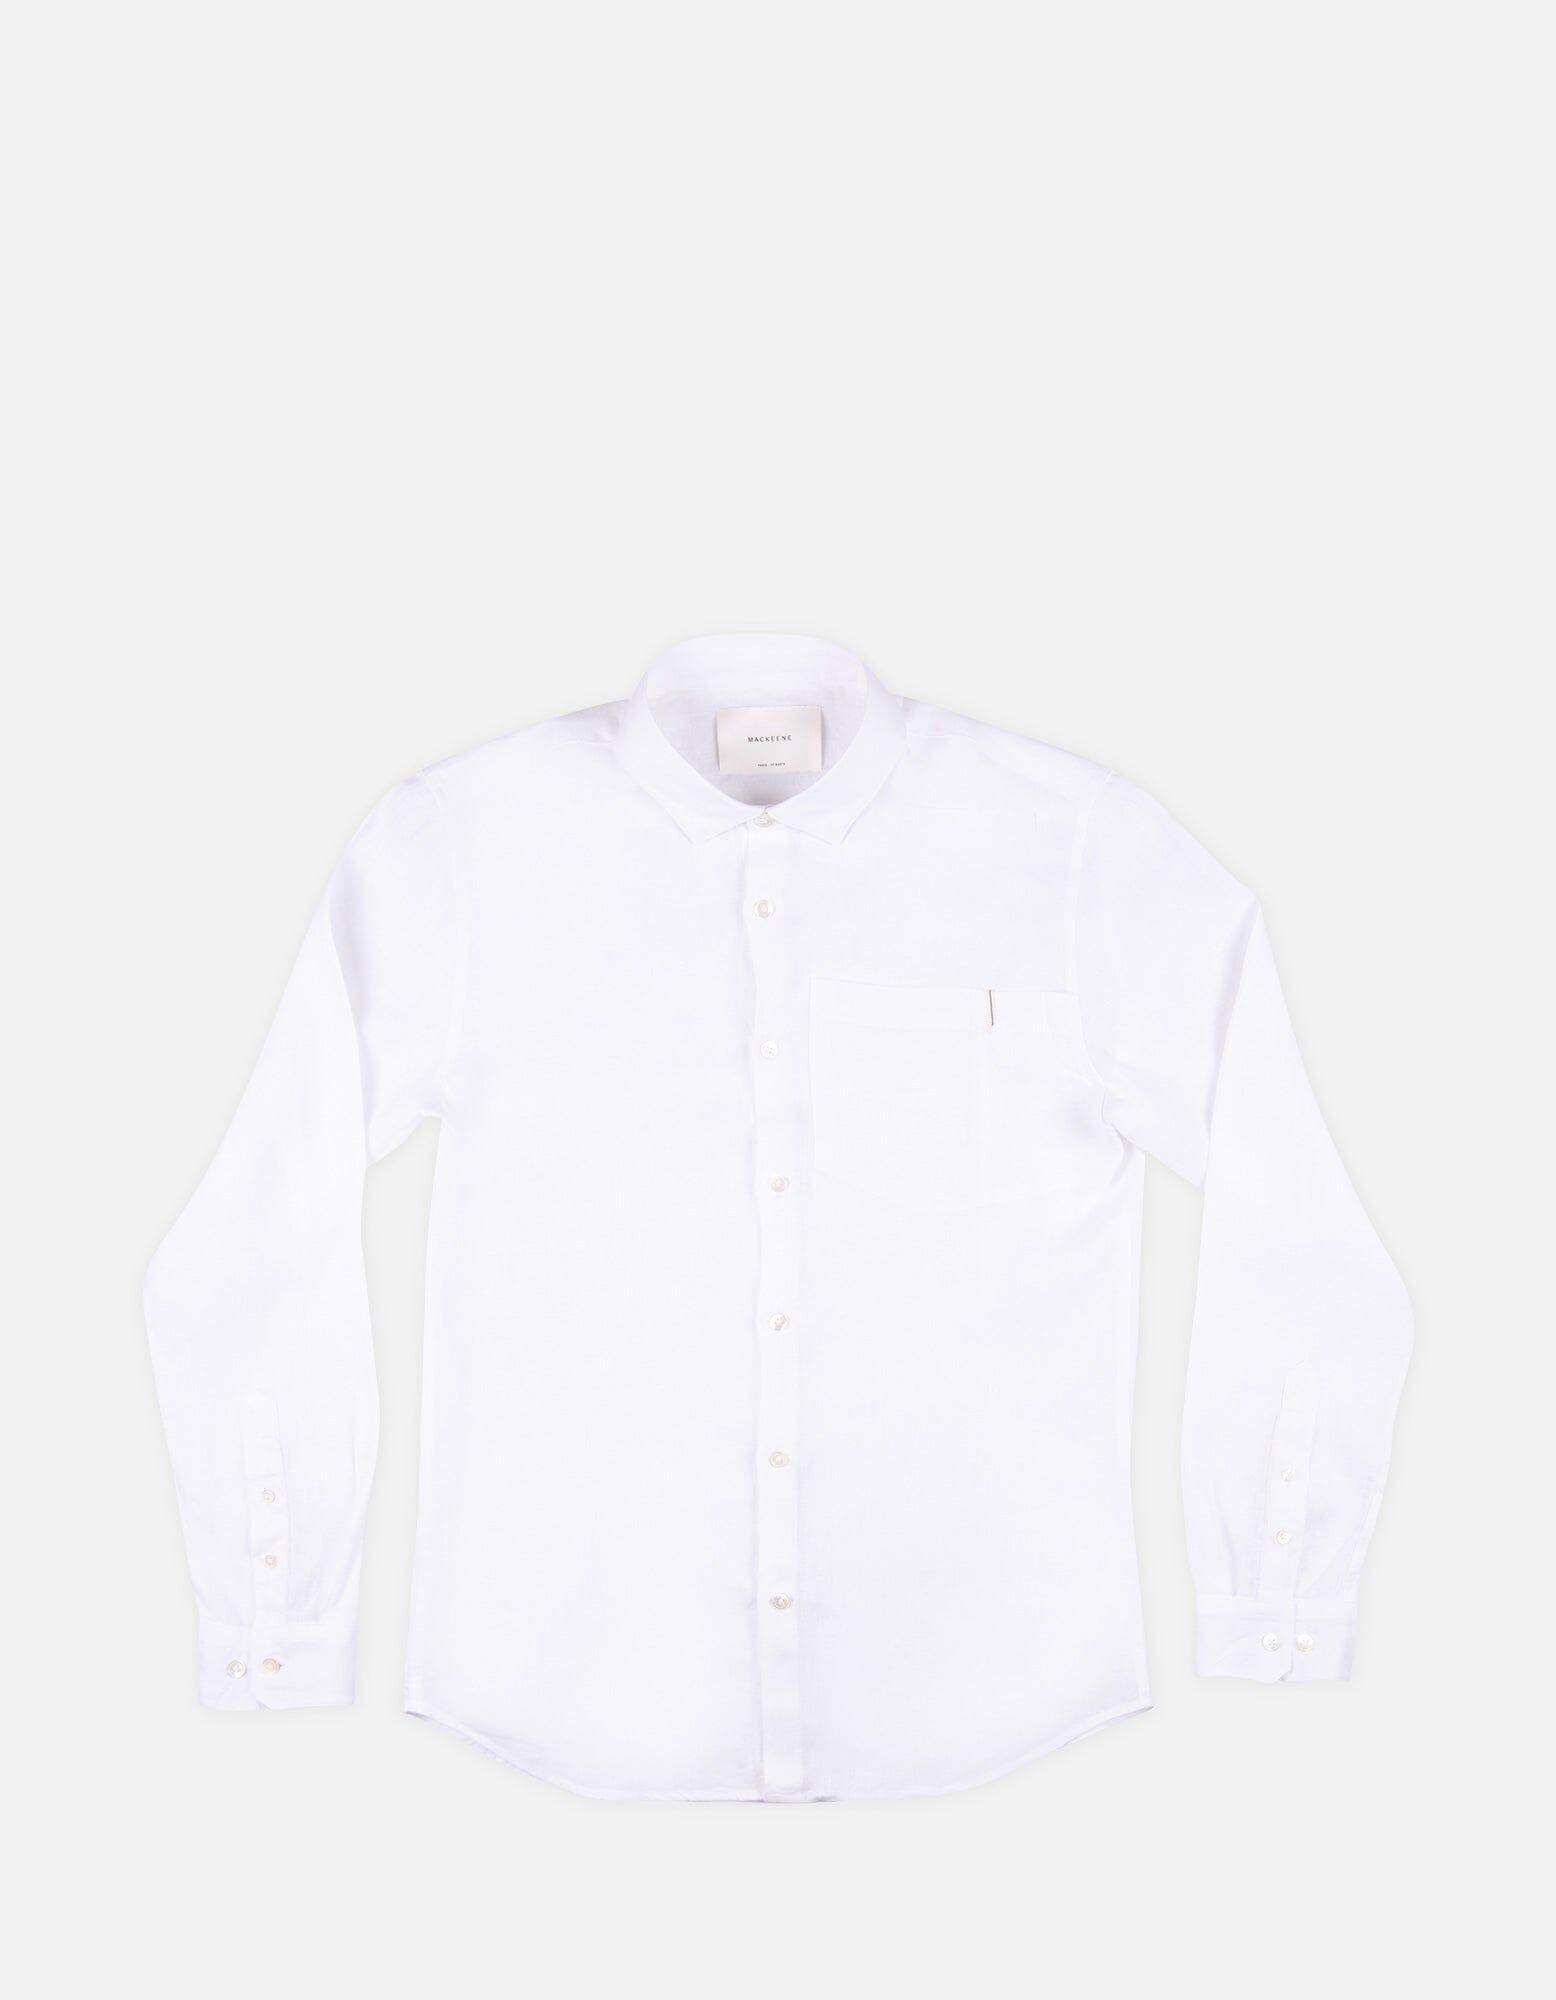 Harry L - 02. White Shirts - Harry L MACKEENE 